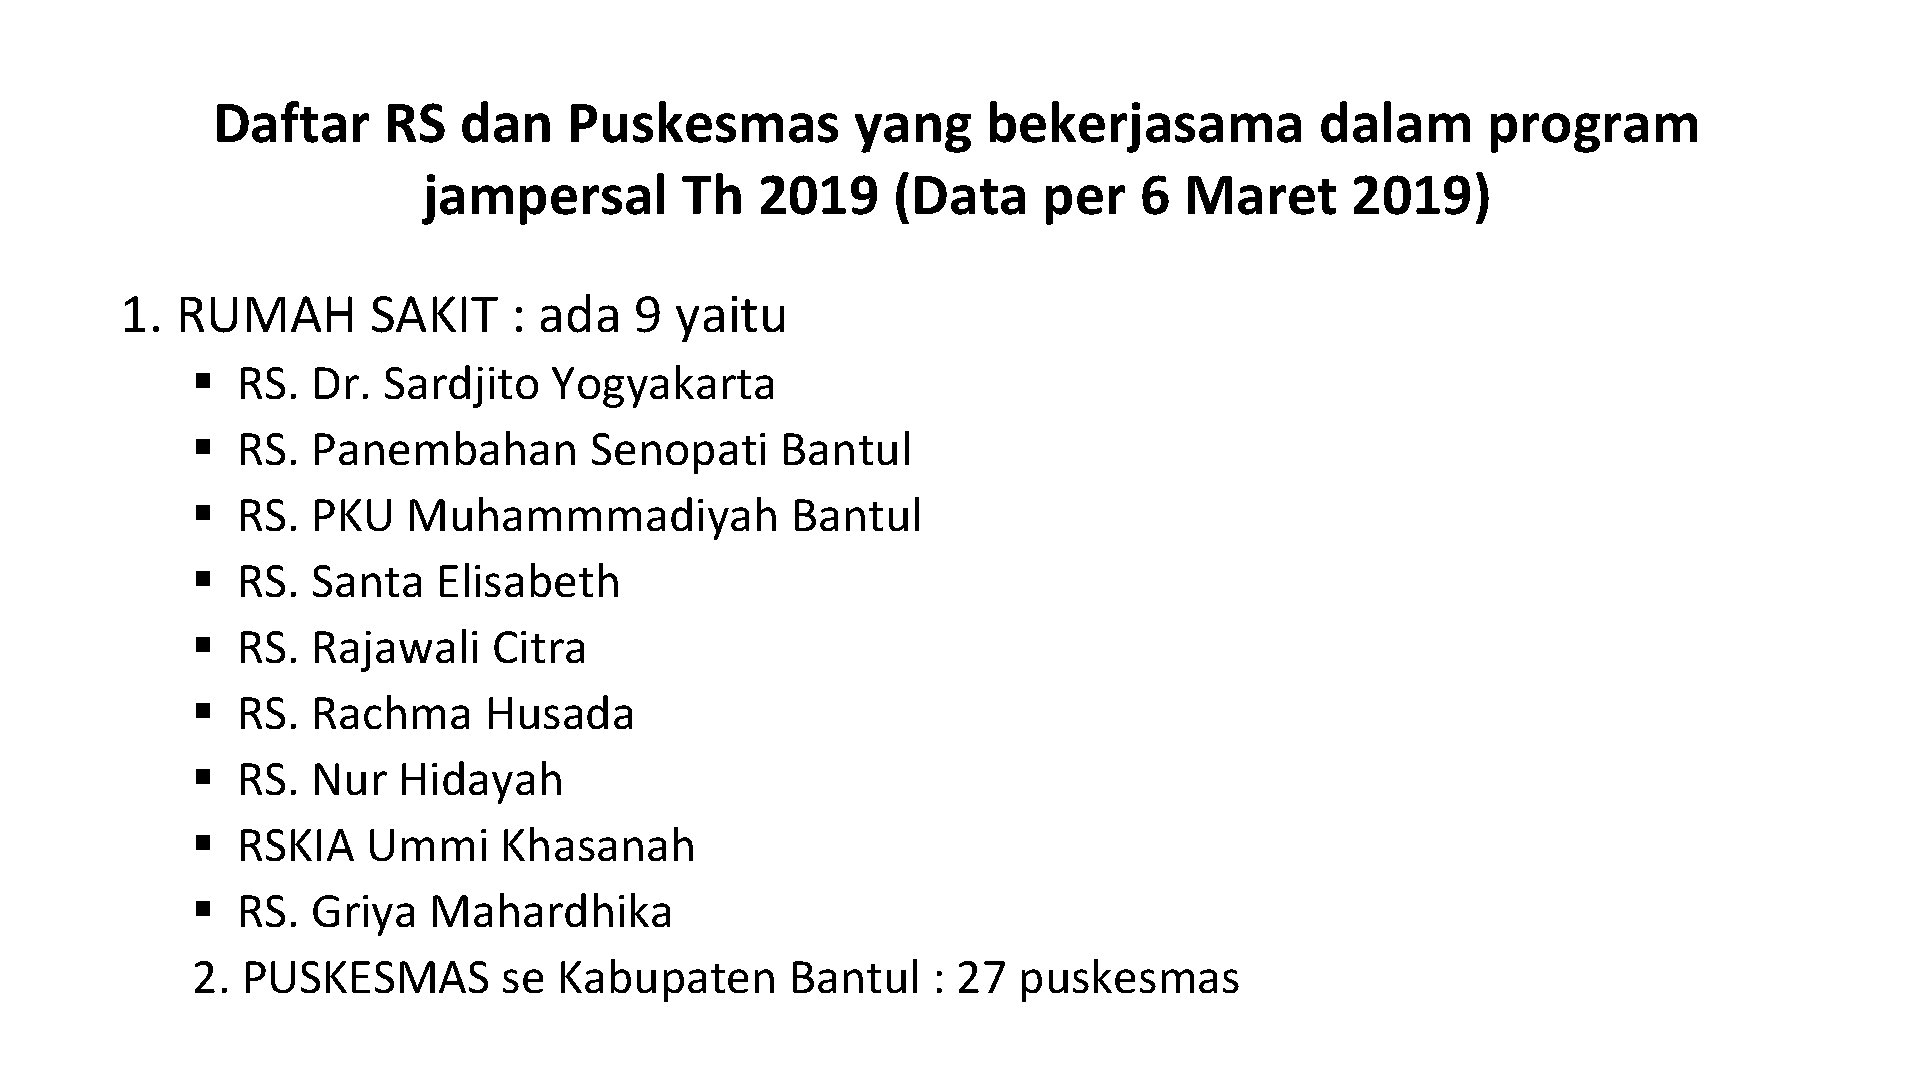 Daftar RS dan Puskesmas yang bekerjasama dalam program jampersal Th 2019 (Data per 6